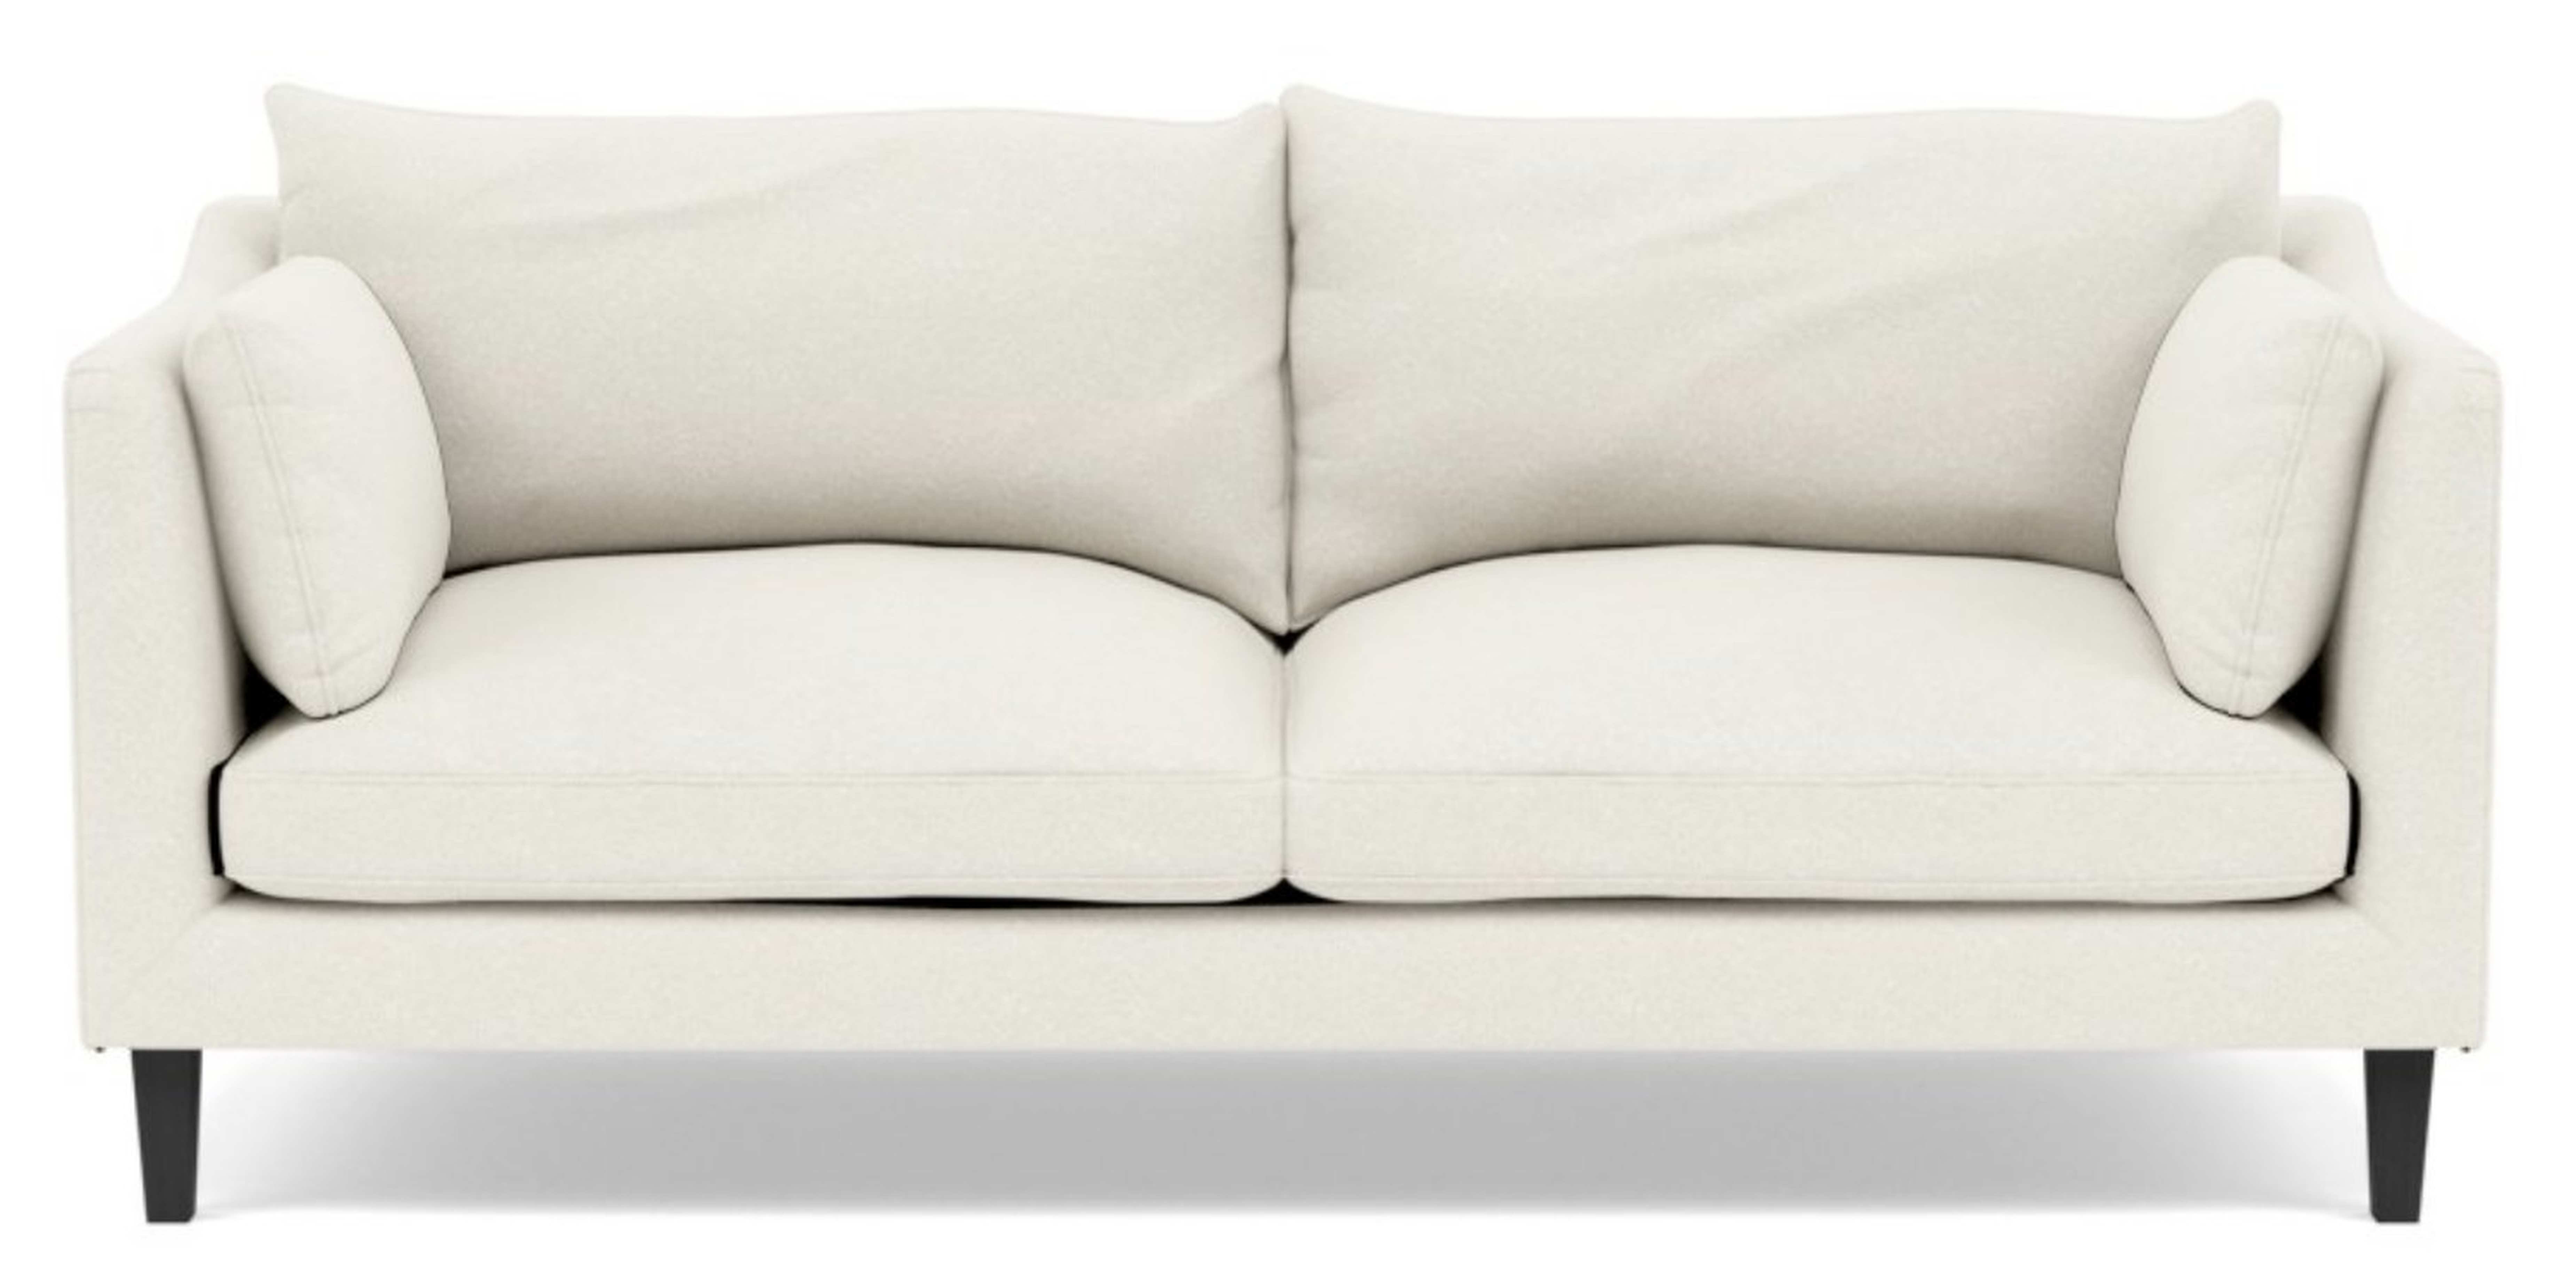 CAITLIN BY THE EVERYGIRL Fabric Sofa - Interior Define